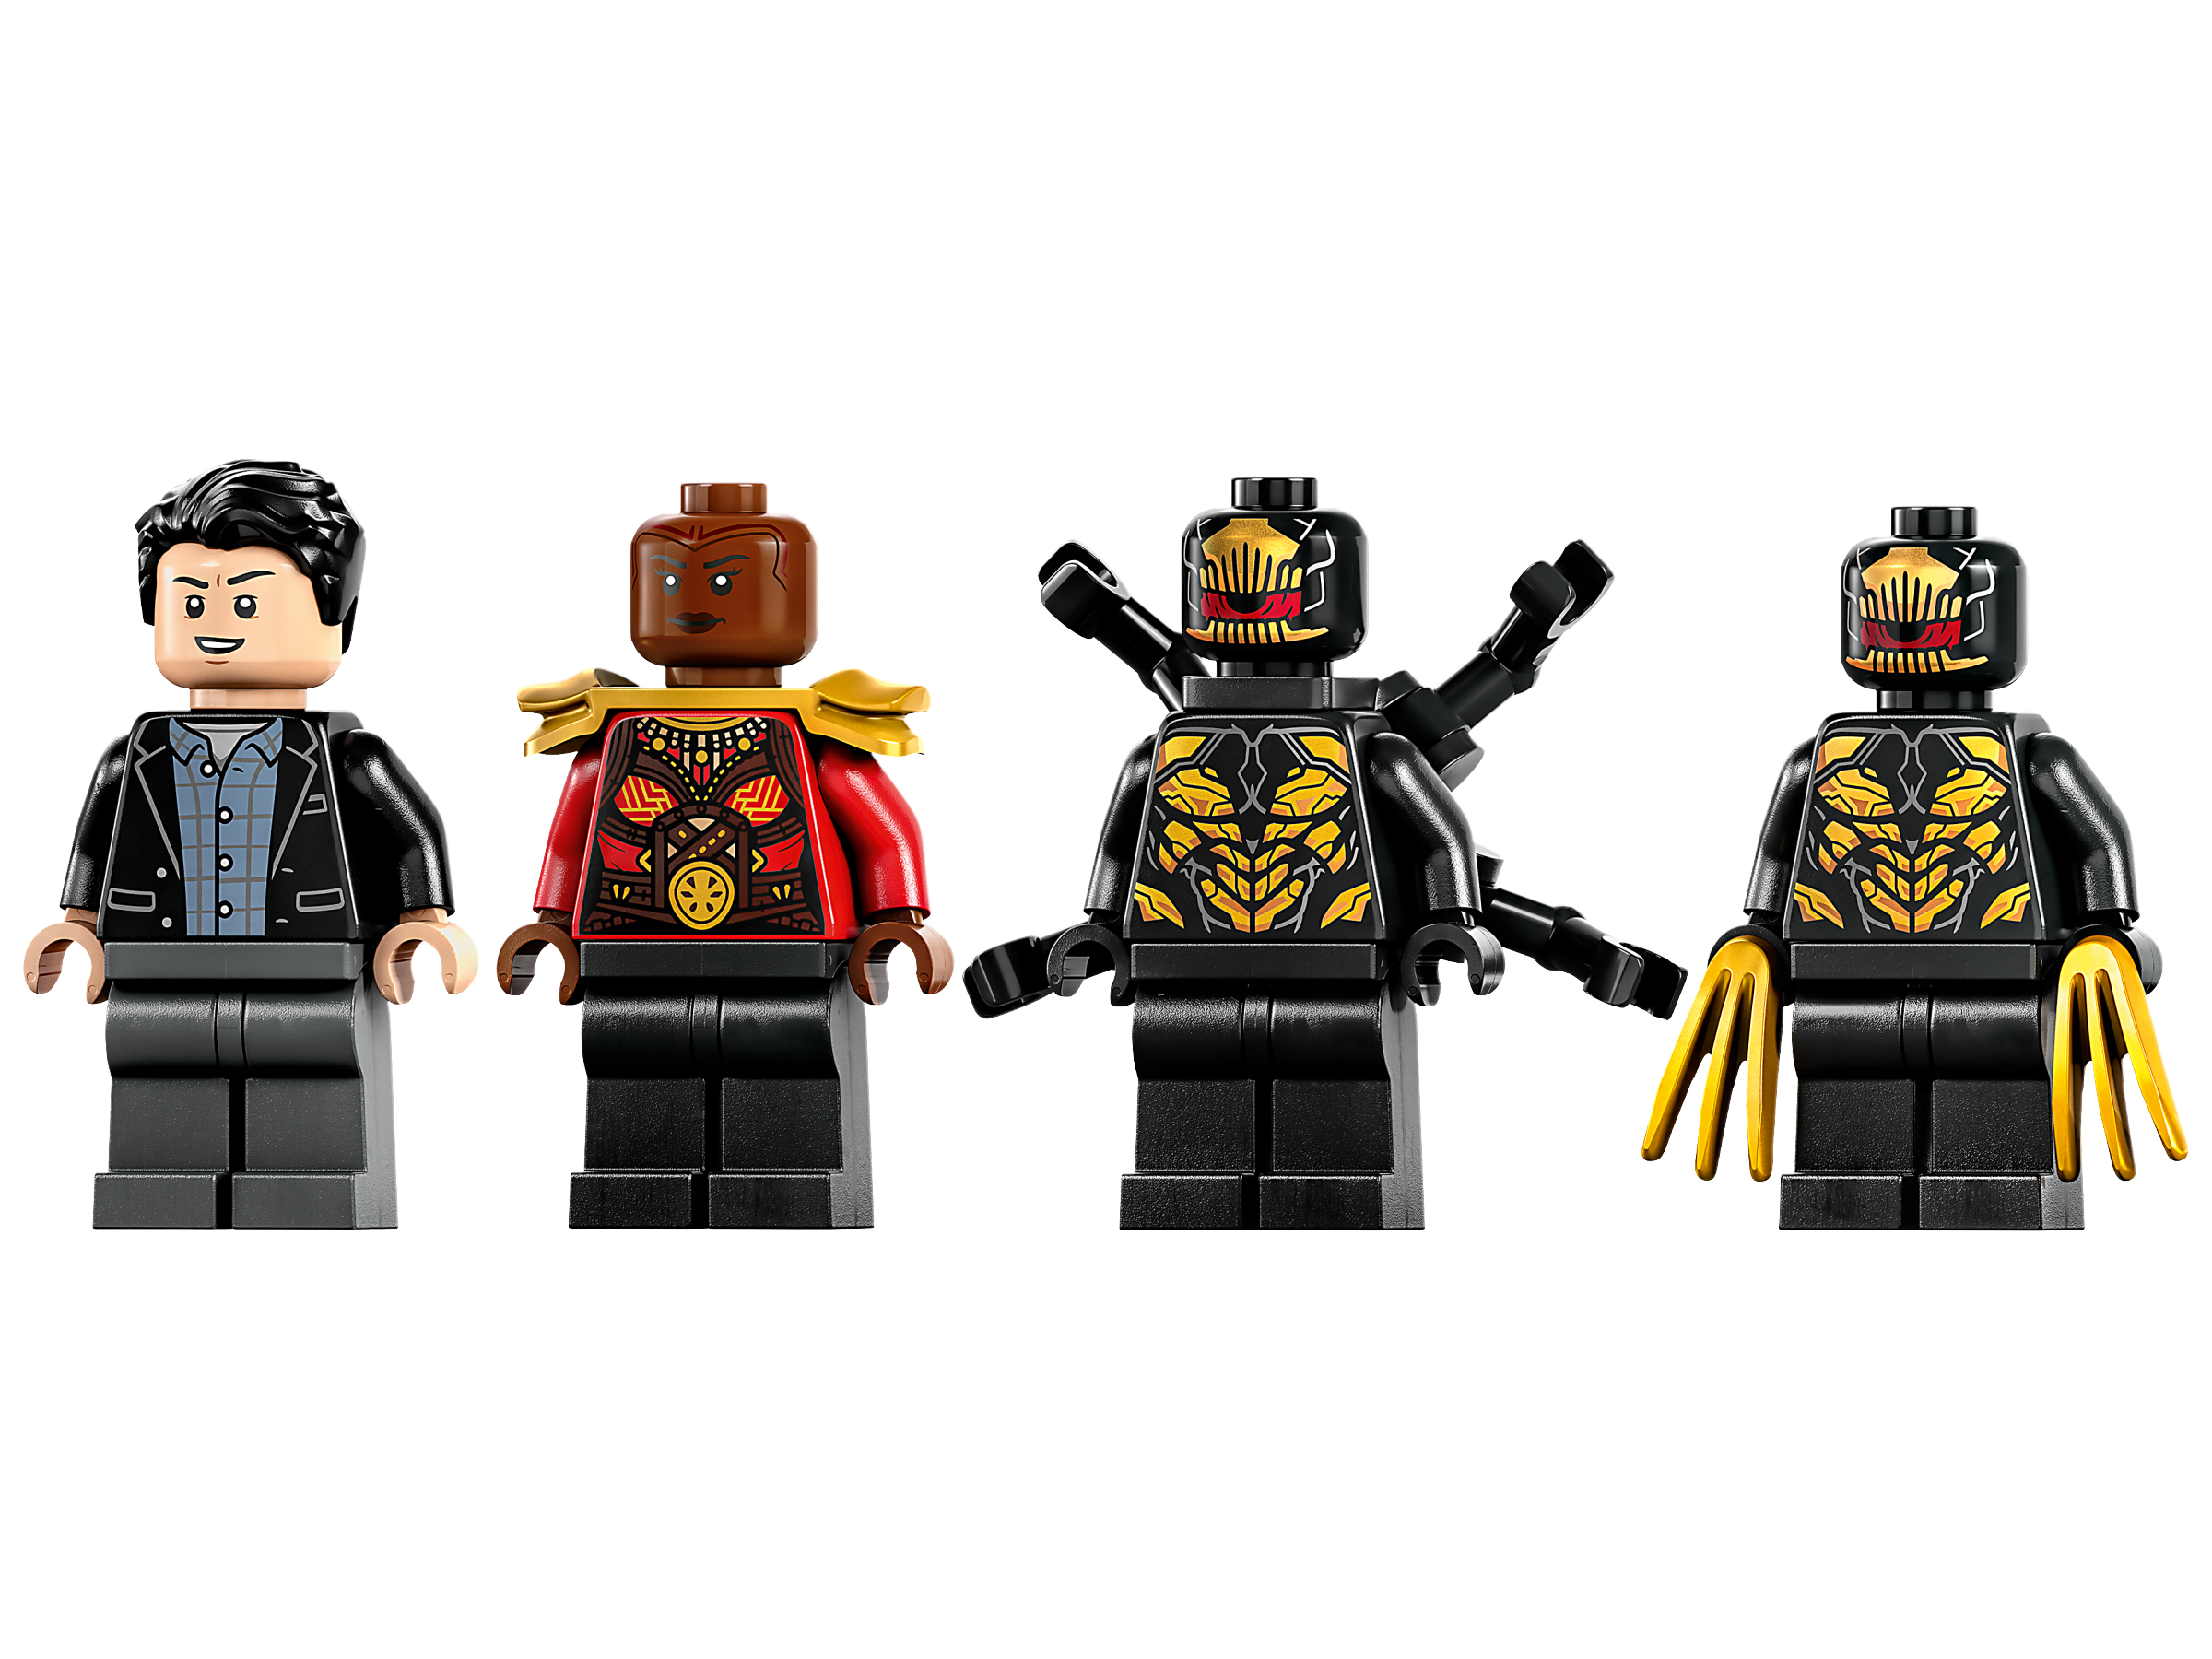 LEGO Marvel Super Heroes Avengers: Infinity War The Hulkbuster